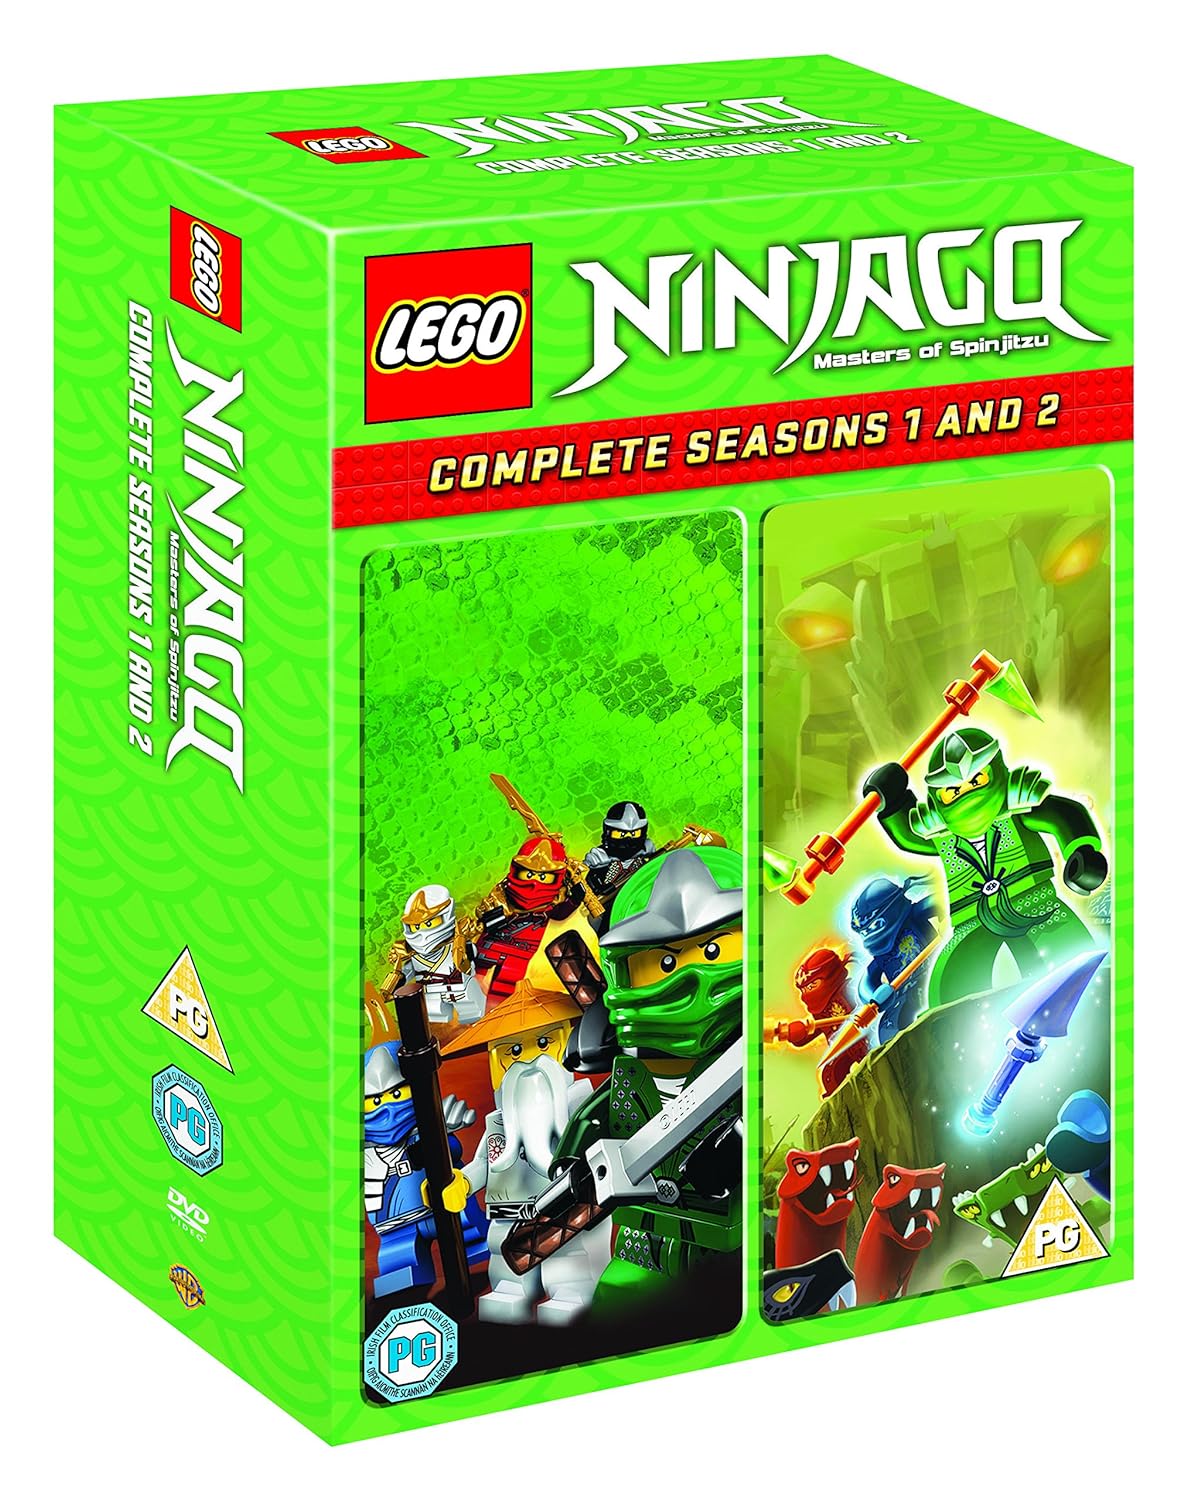 Lego Ninjago: Masters of Spinjitsu Complete Season 1-2 [DVD] [2015]